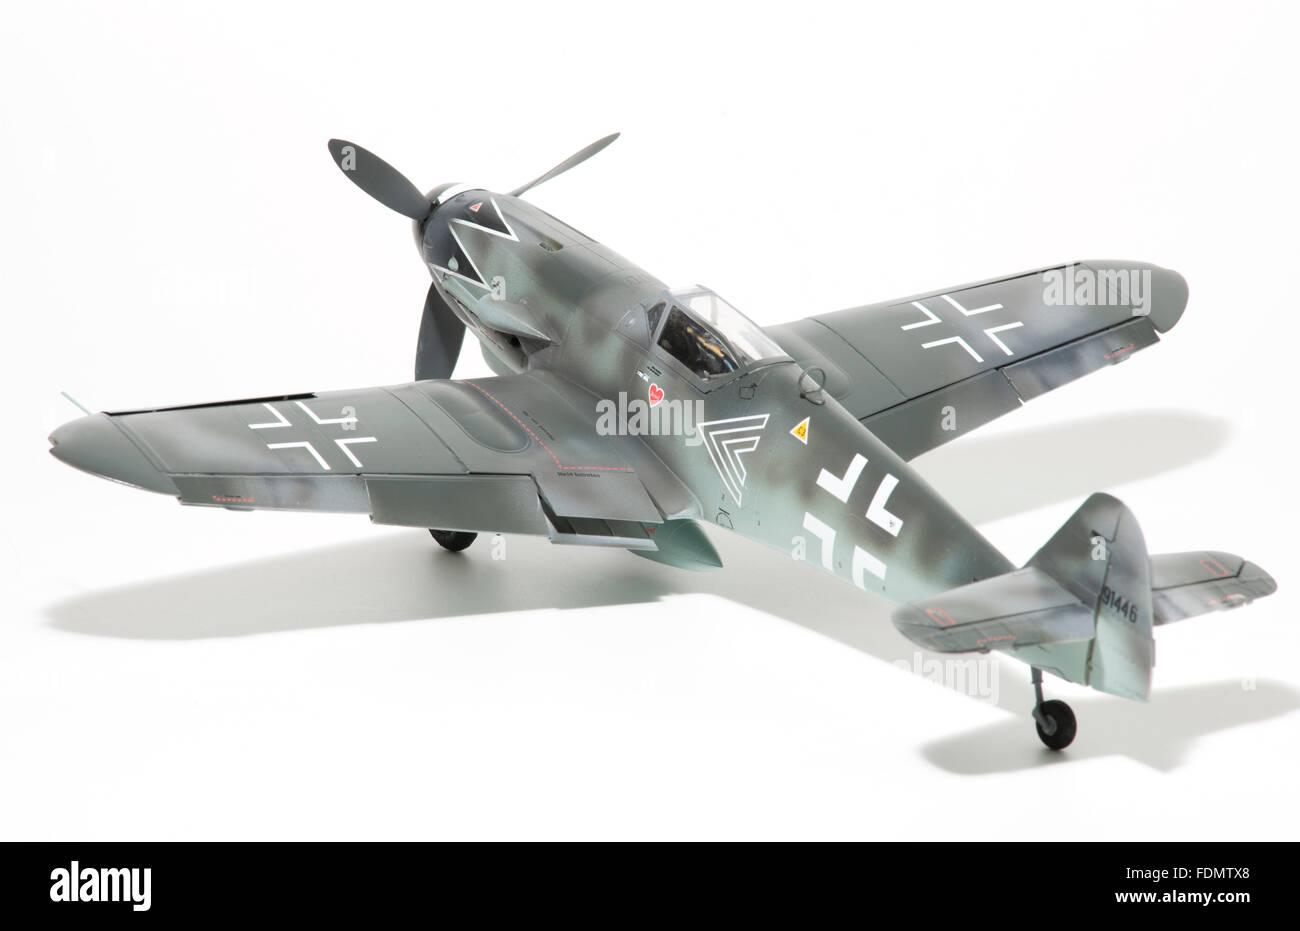 Messerschmitt Bf109G-10 Erla, Luftwaffe markings. 1:32 fine scale model on white studio background. Stock Photo